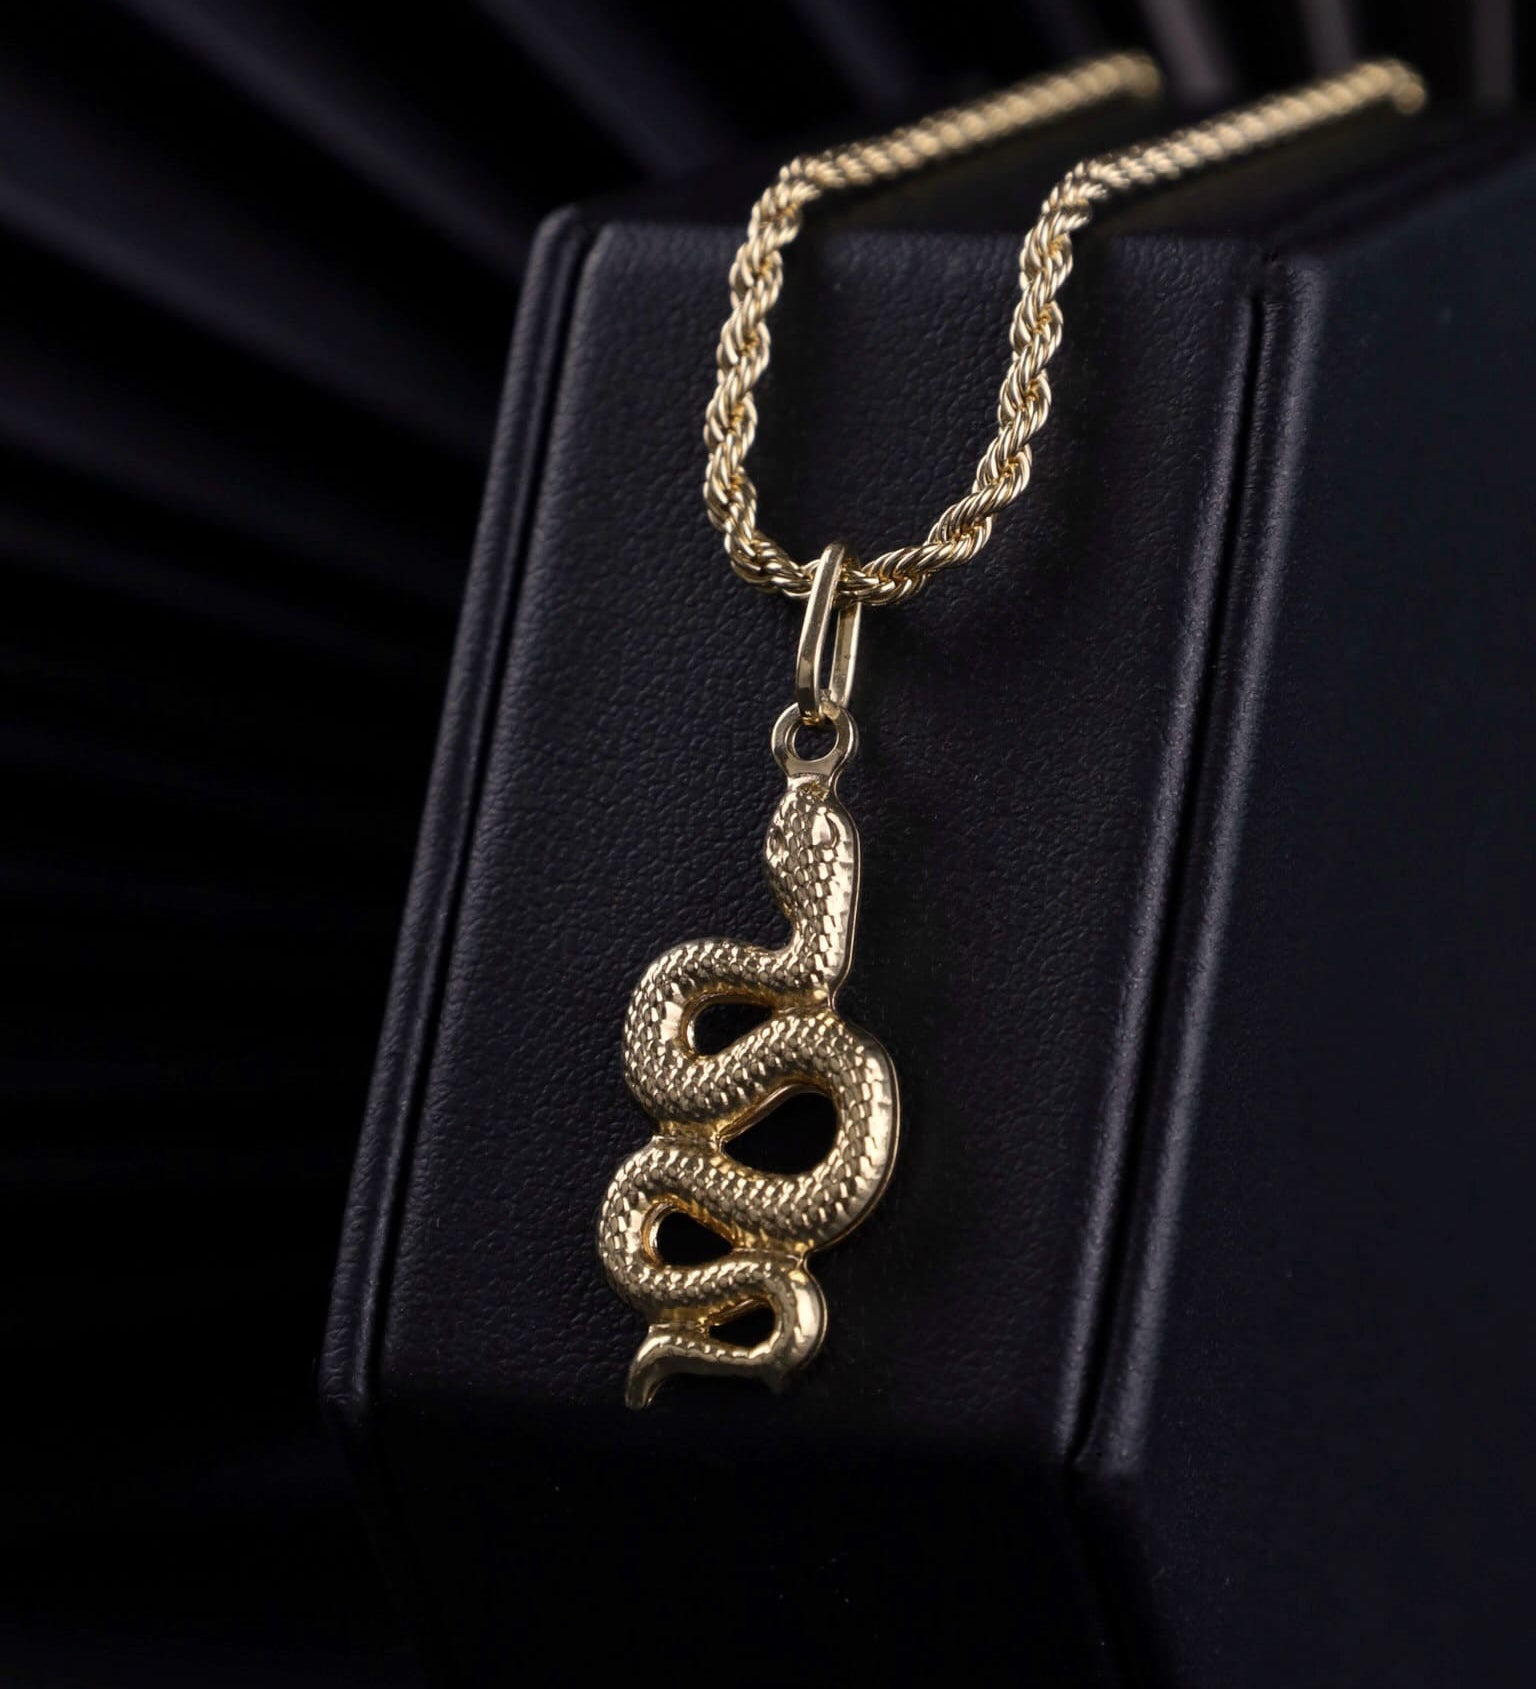 Lazo Chain in 18k Gold for Men